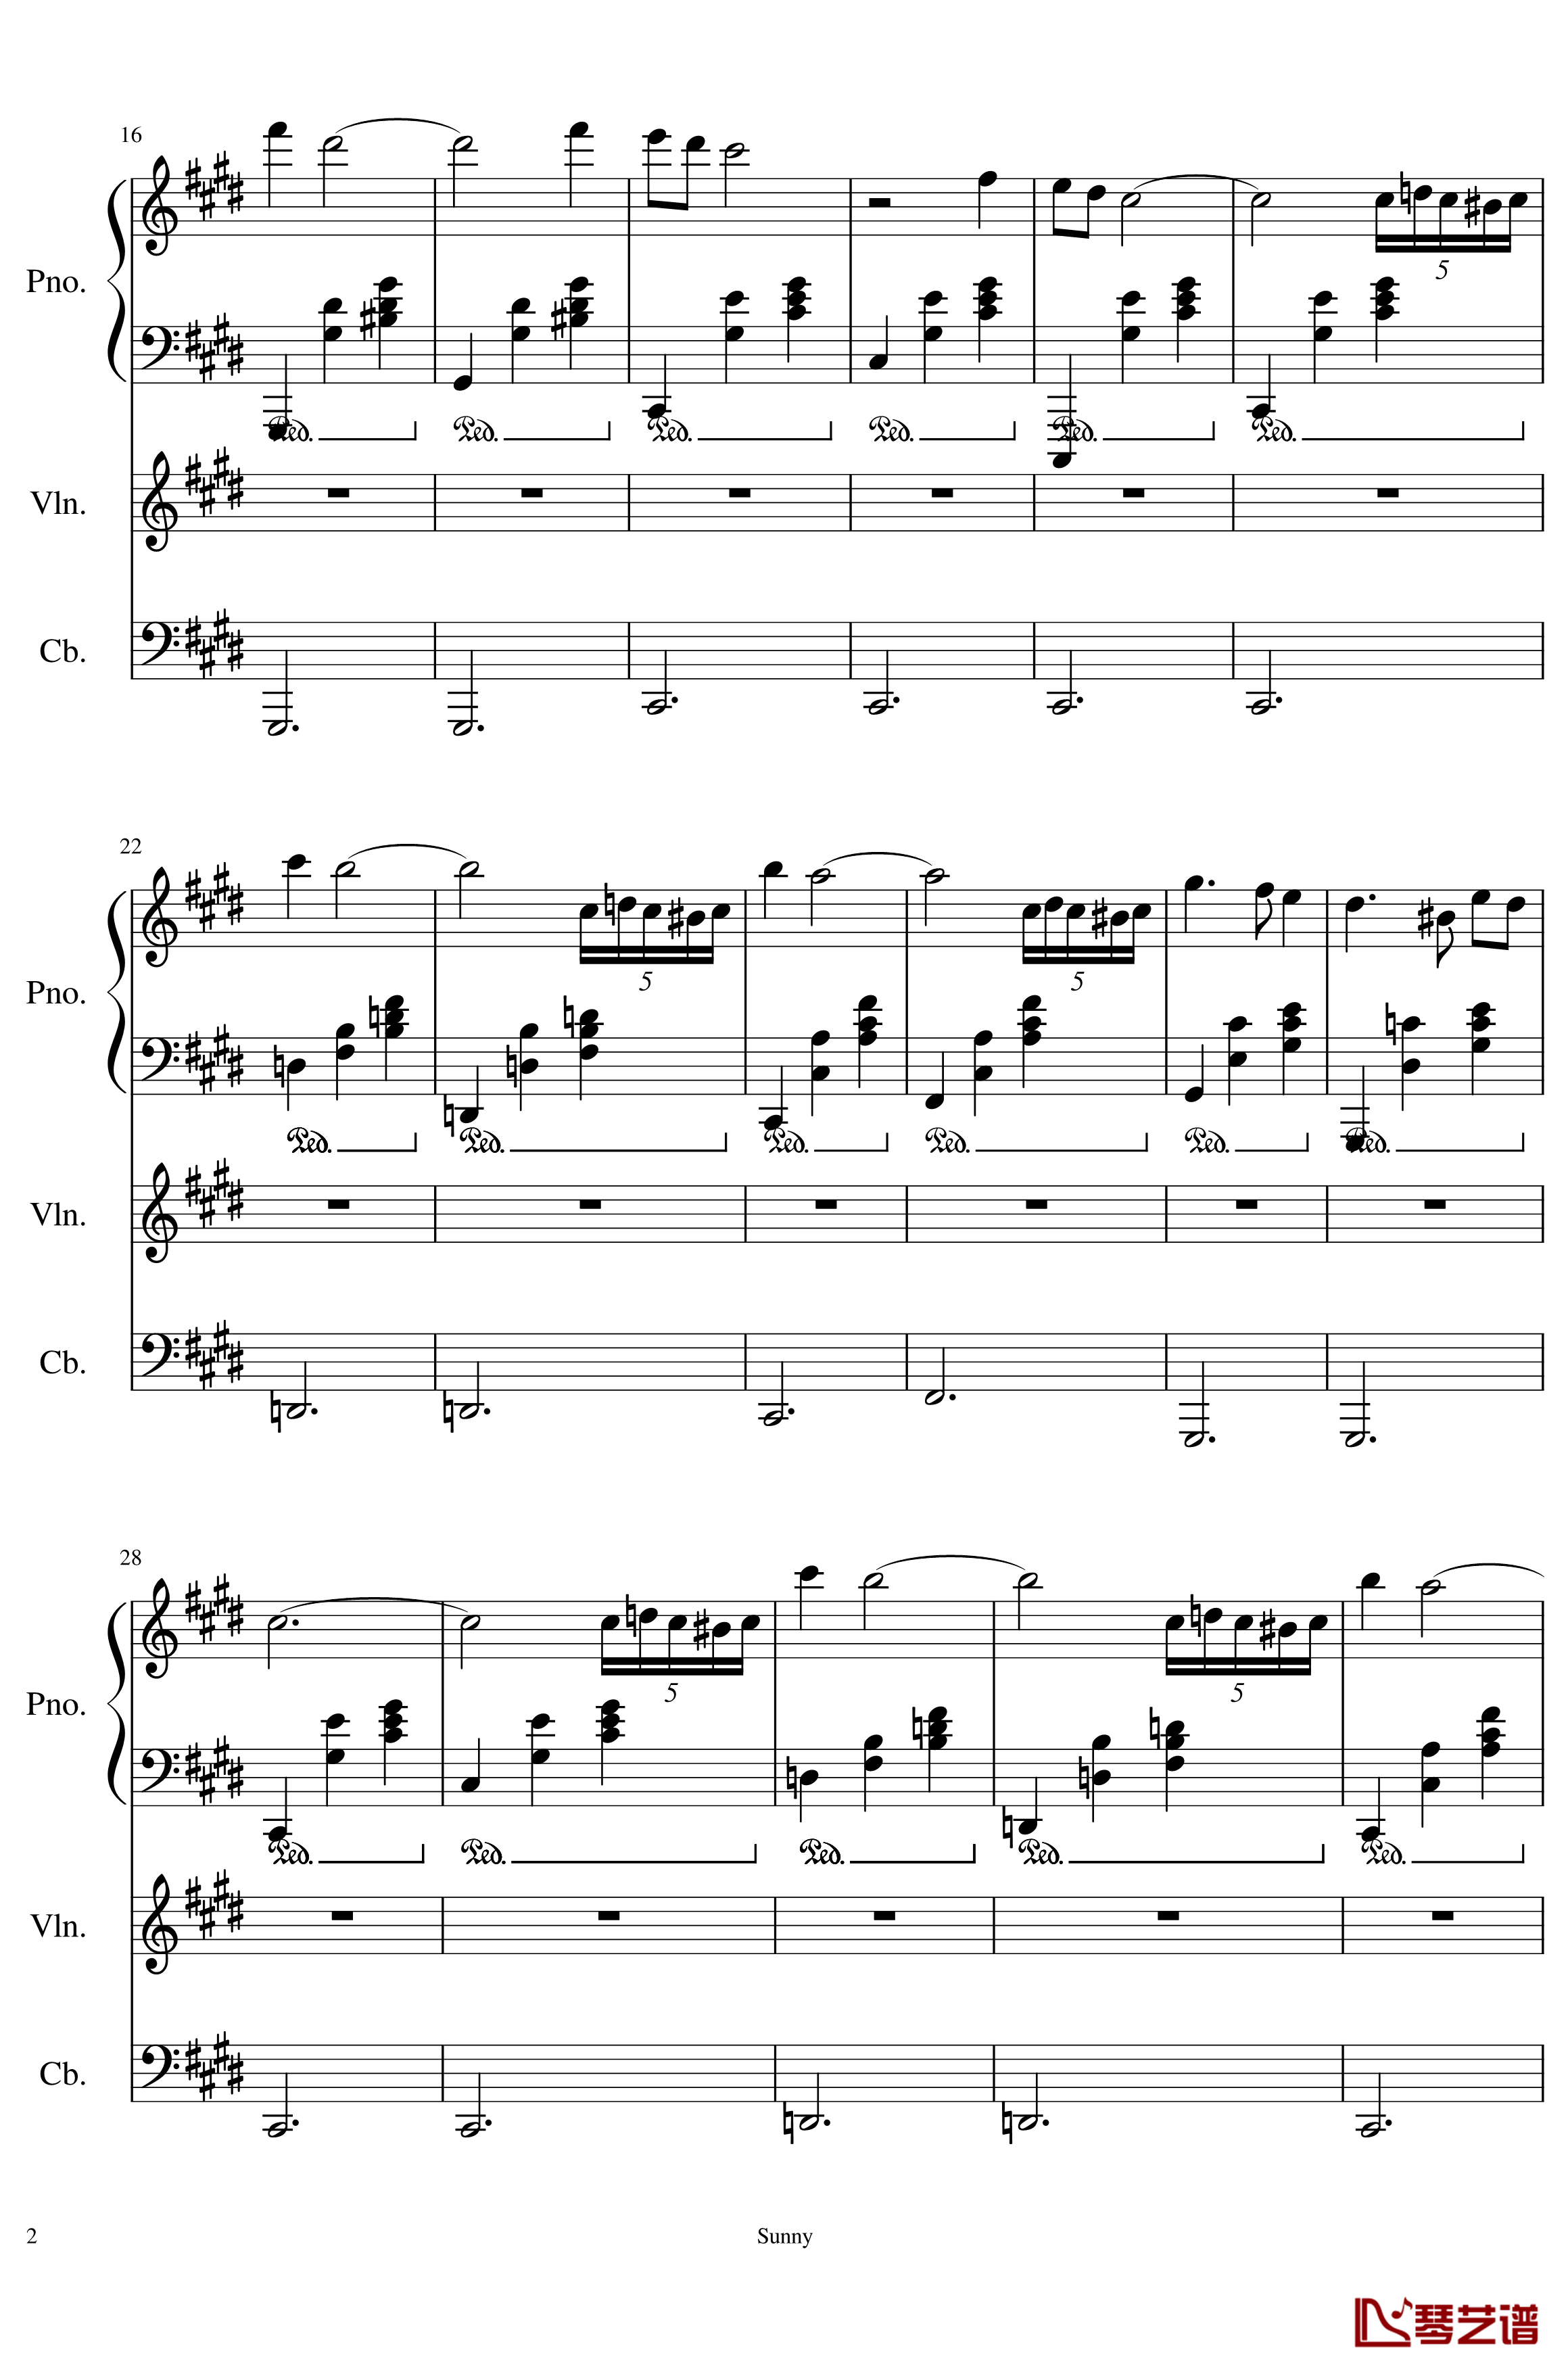 Op.1-2 钢琴谱-最苦与最乐-SunnyAK472